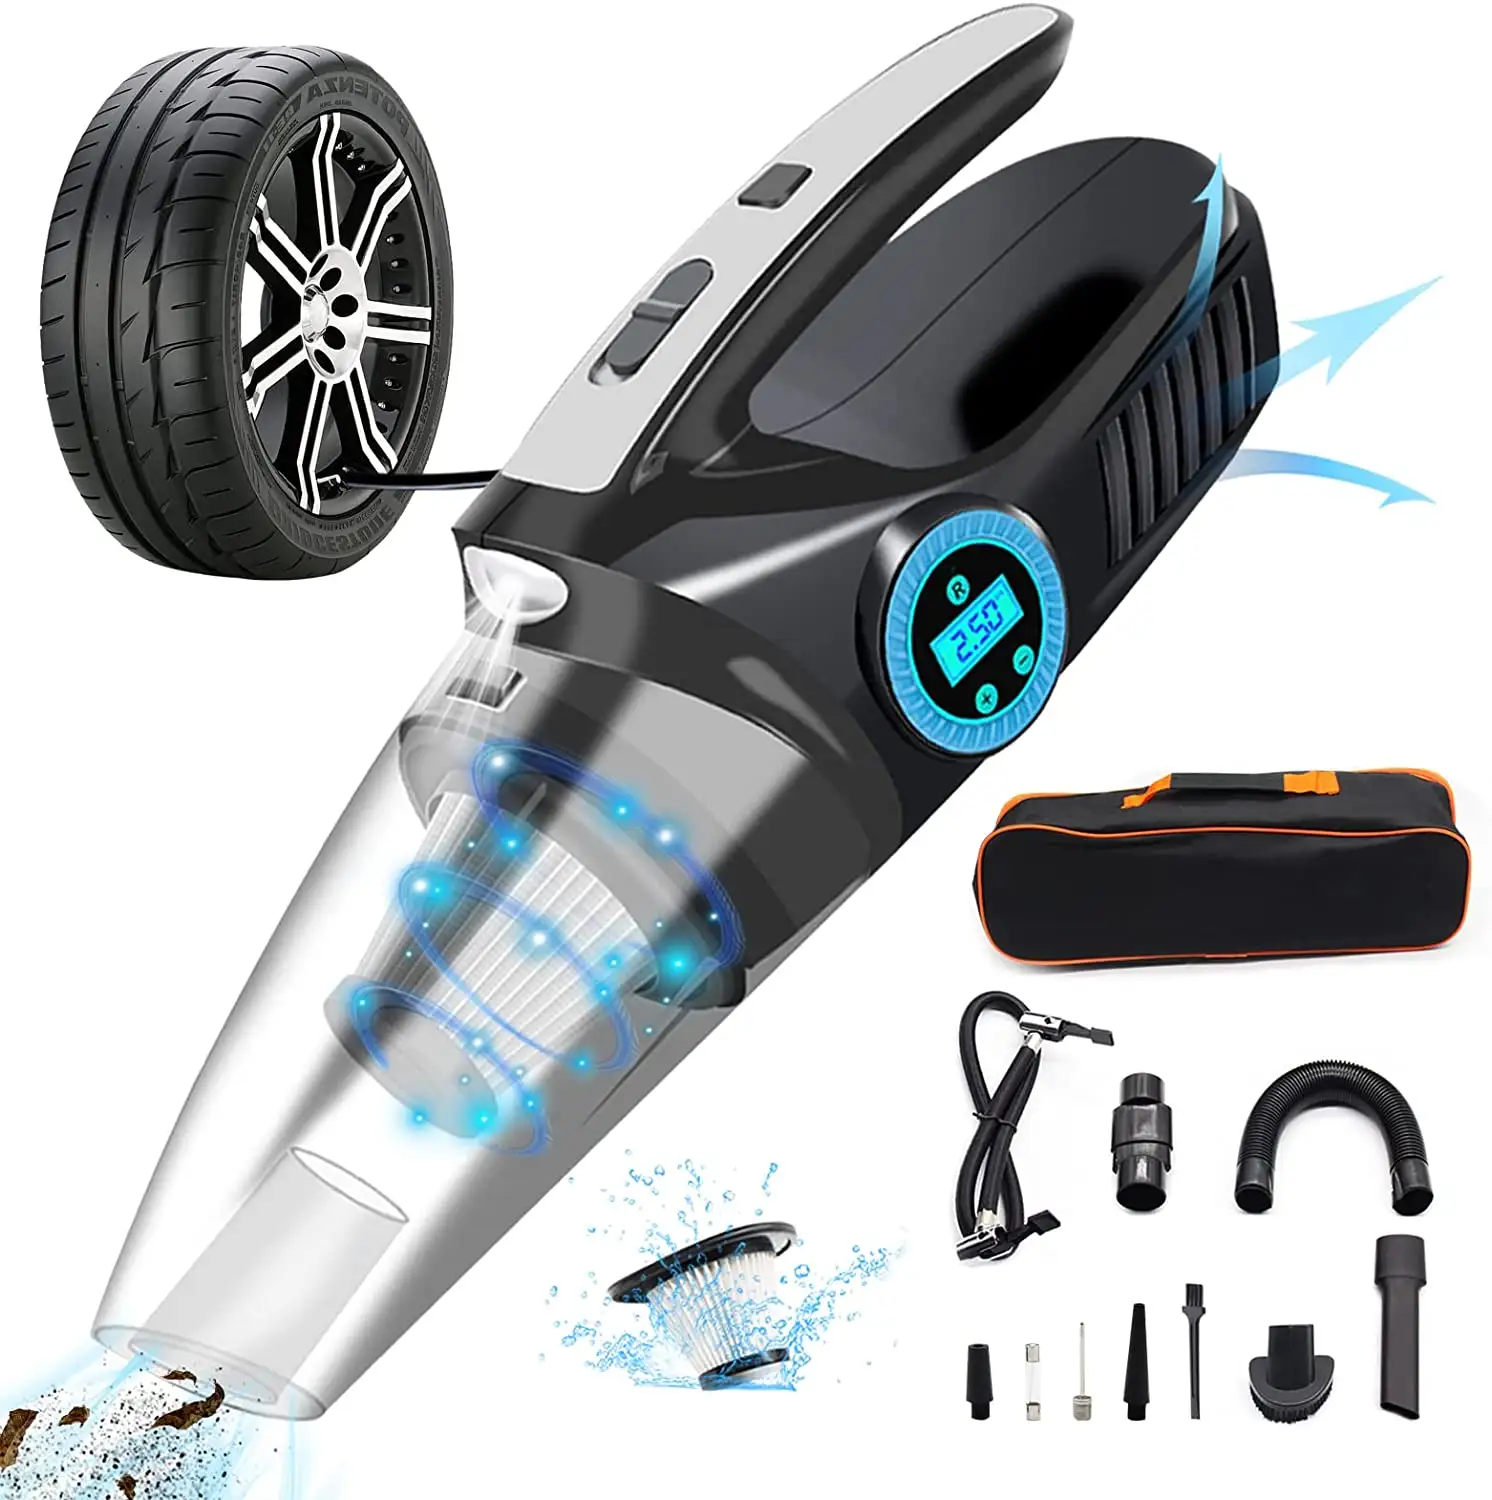 Vacuum Cleaner Tire Inflator Pump Car Powerful Handheld Vacuum Cleaner 12V Pressure Measurement with LED Lighting